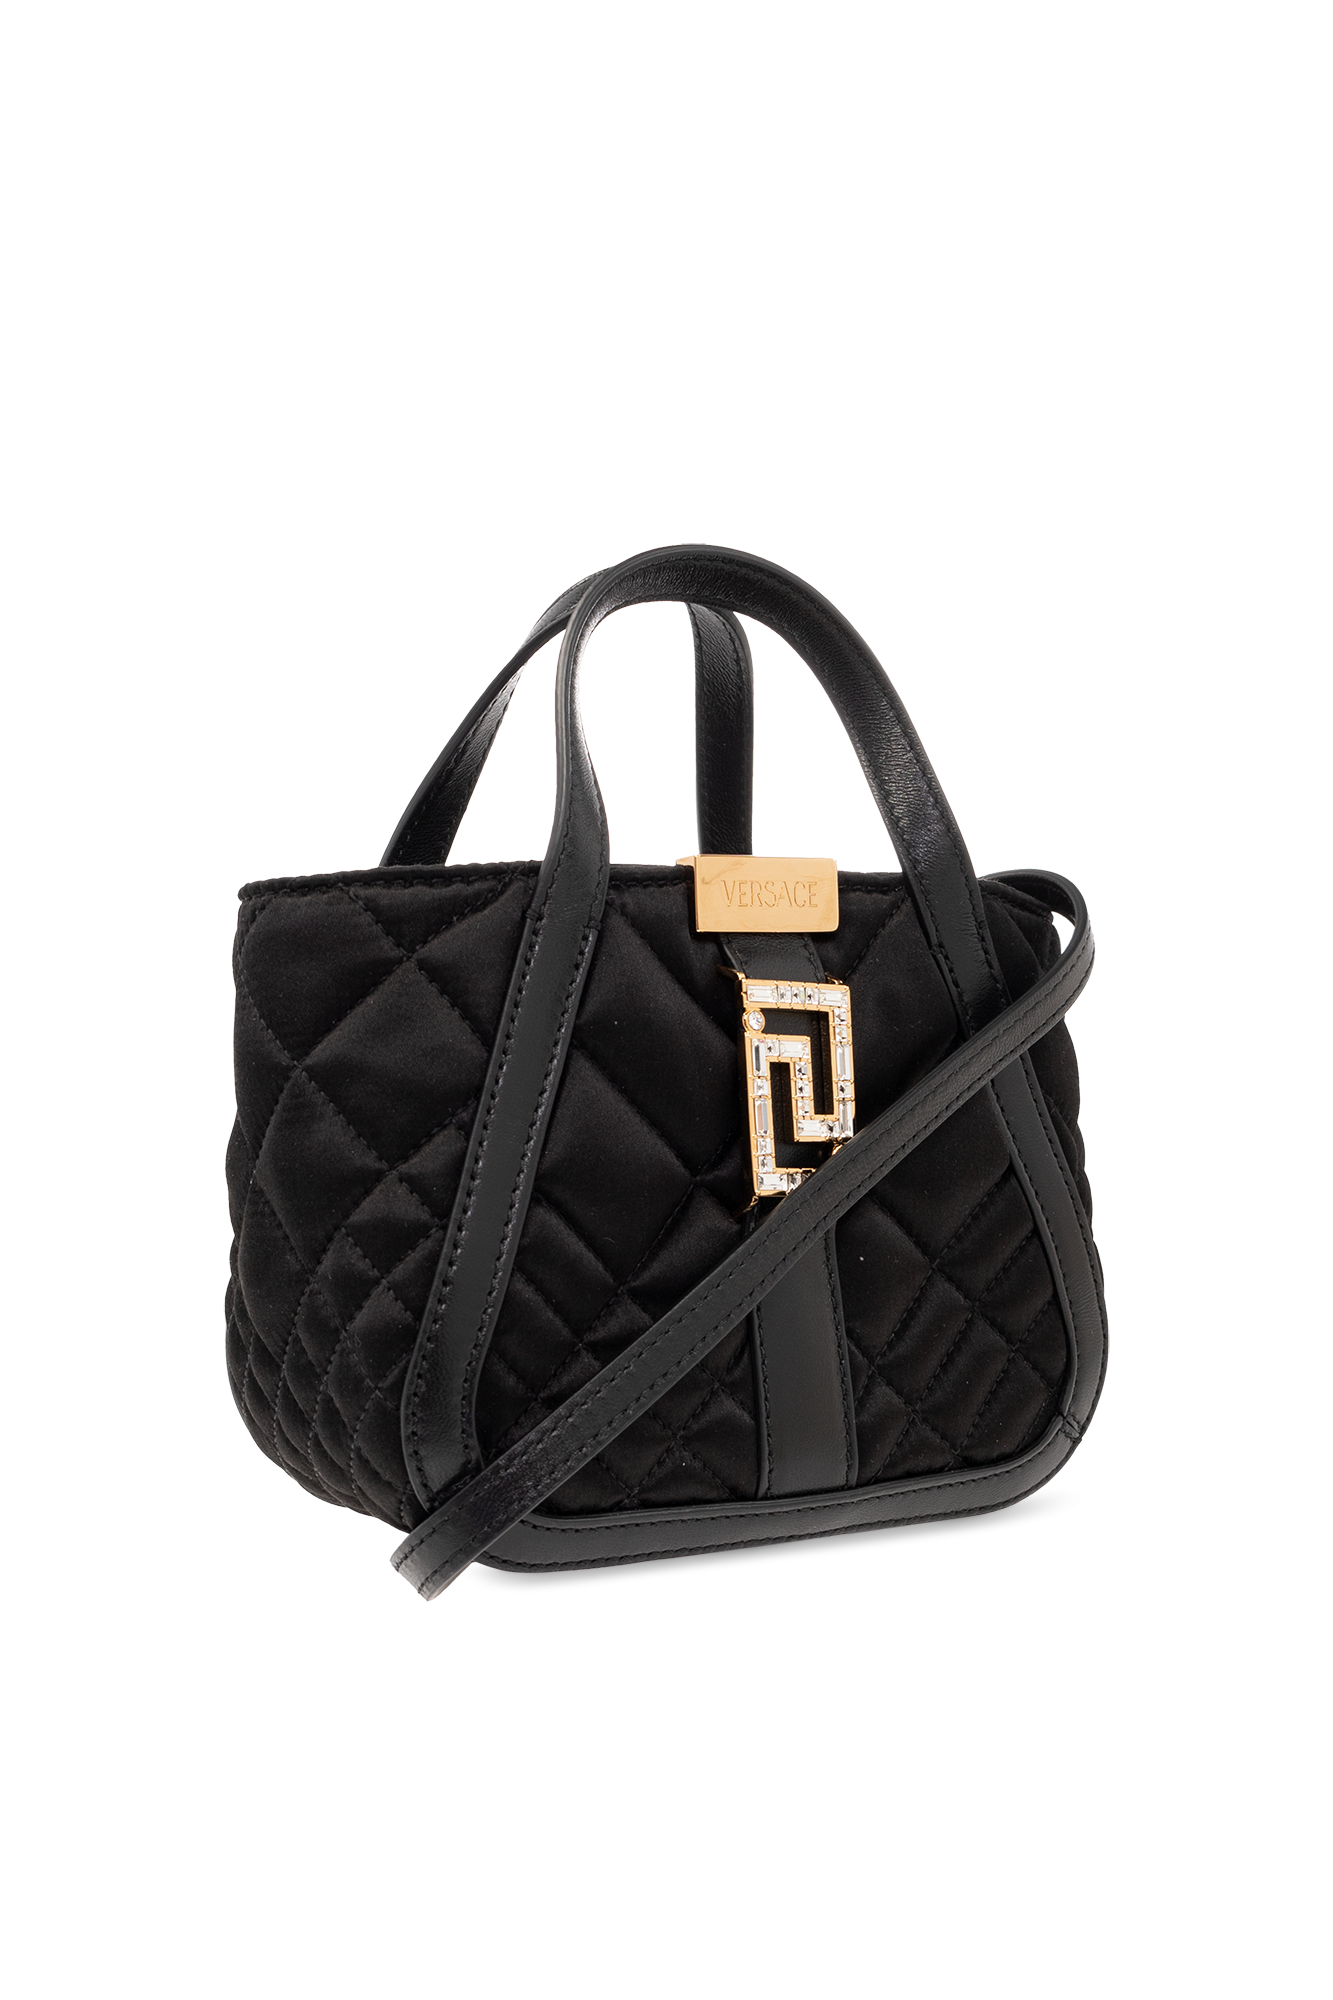 Greca Goddess Large Leather Tote Bag in Black - Versace